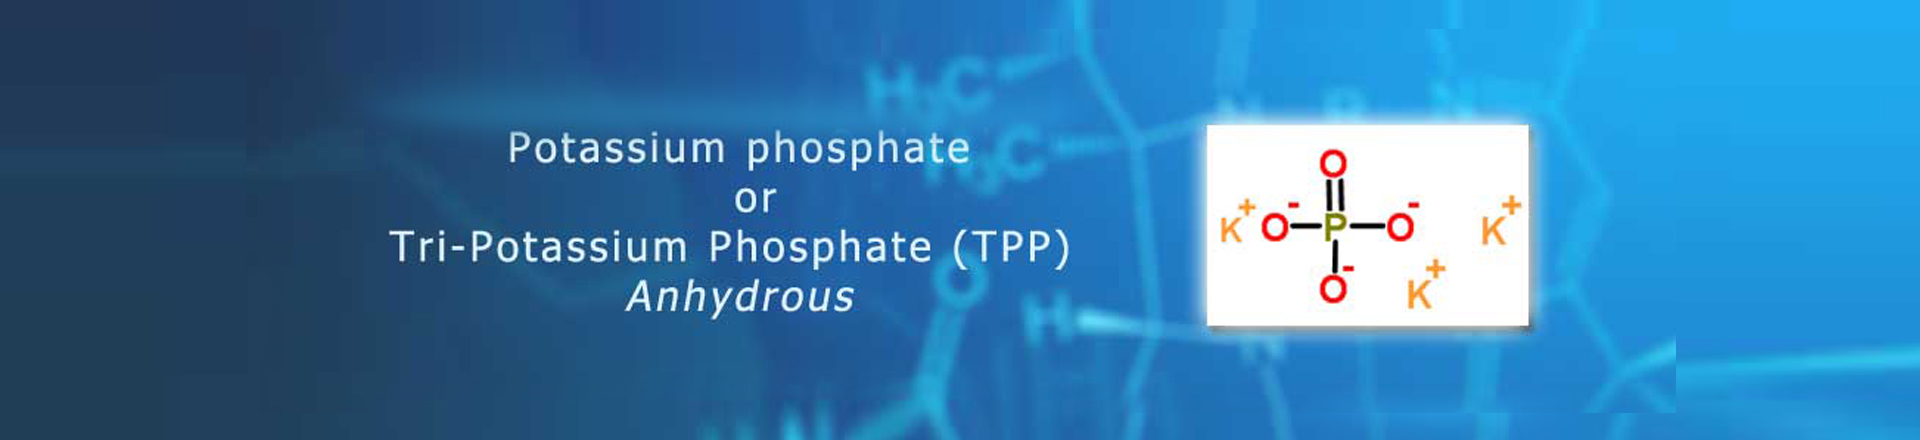 manufacturer of phosphate chemicals